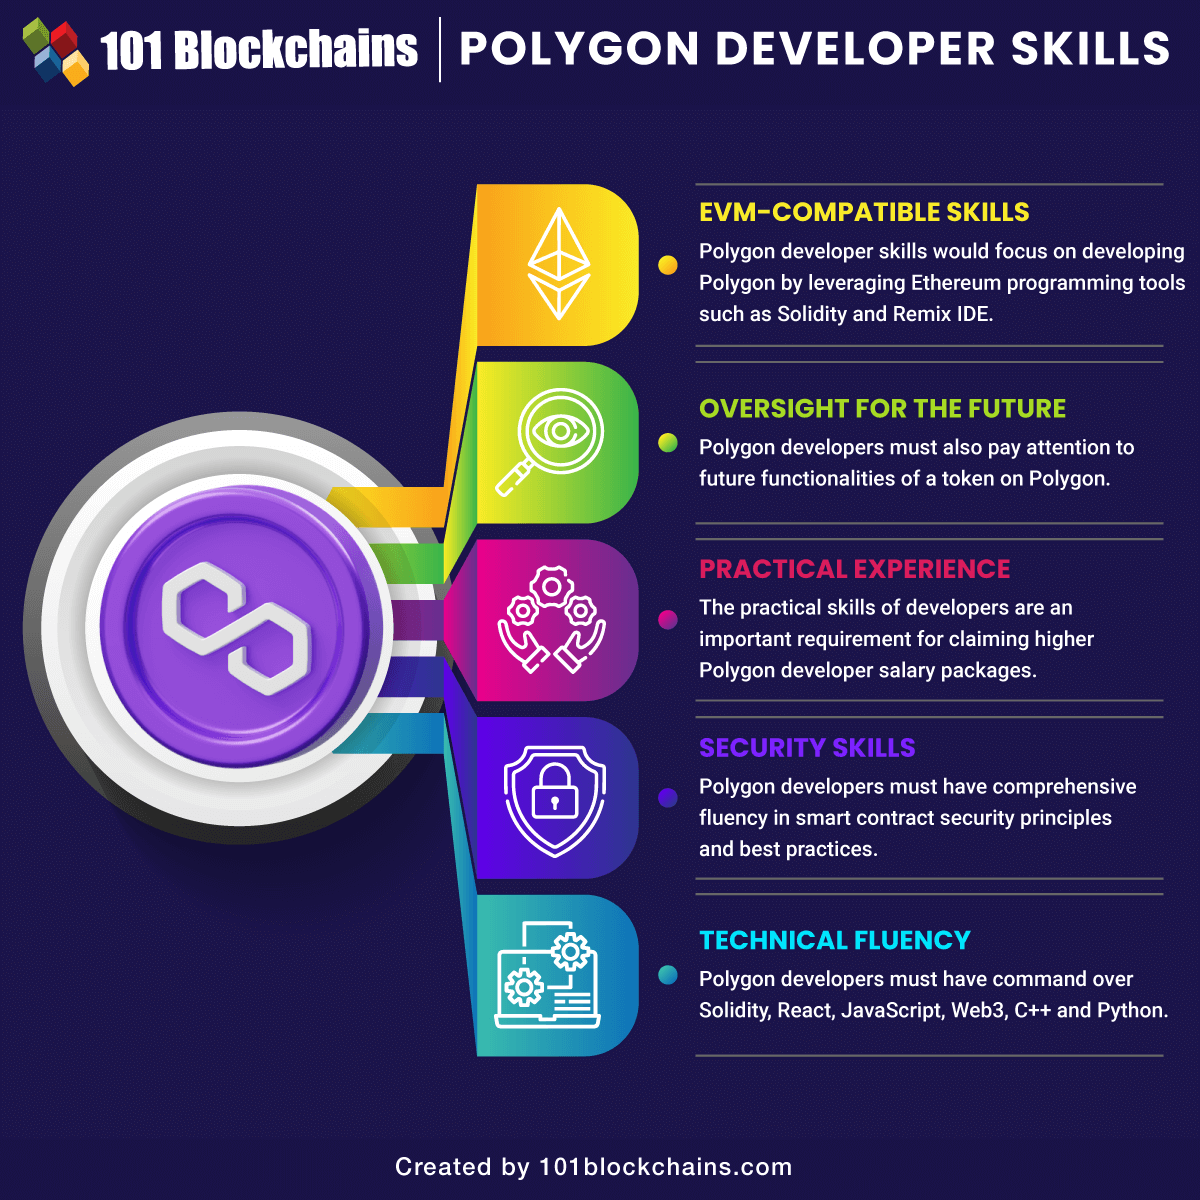 Polygon Developer skills